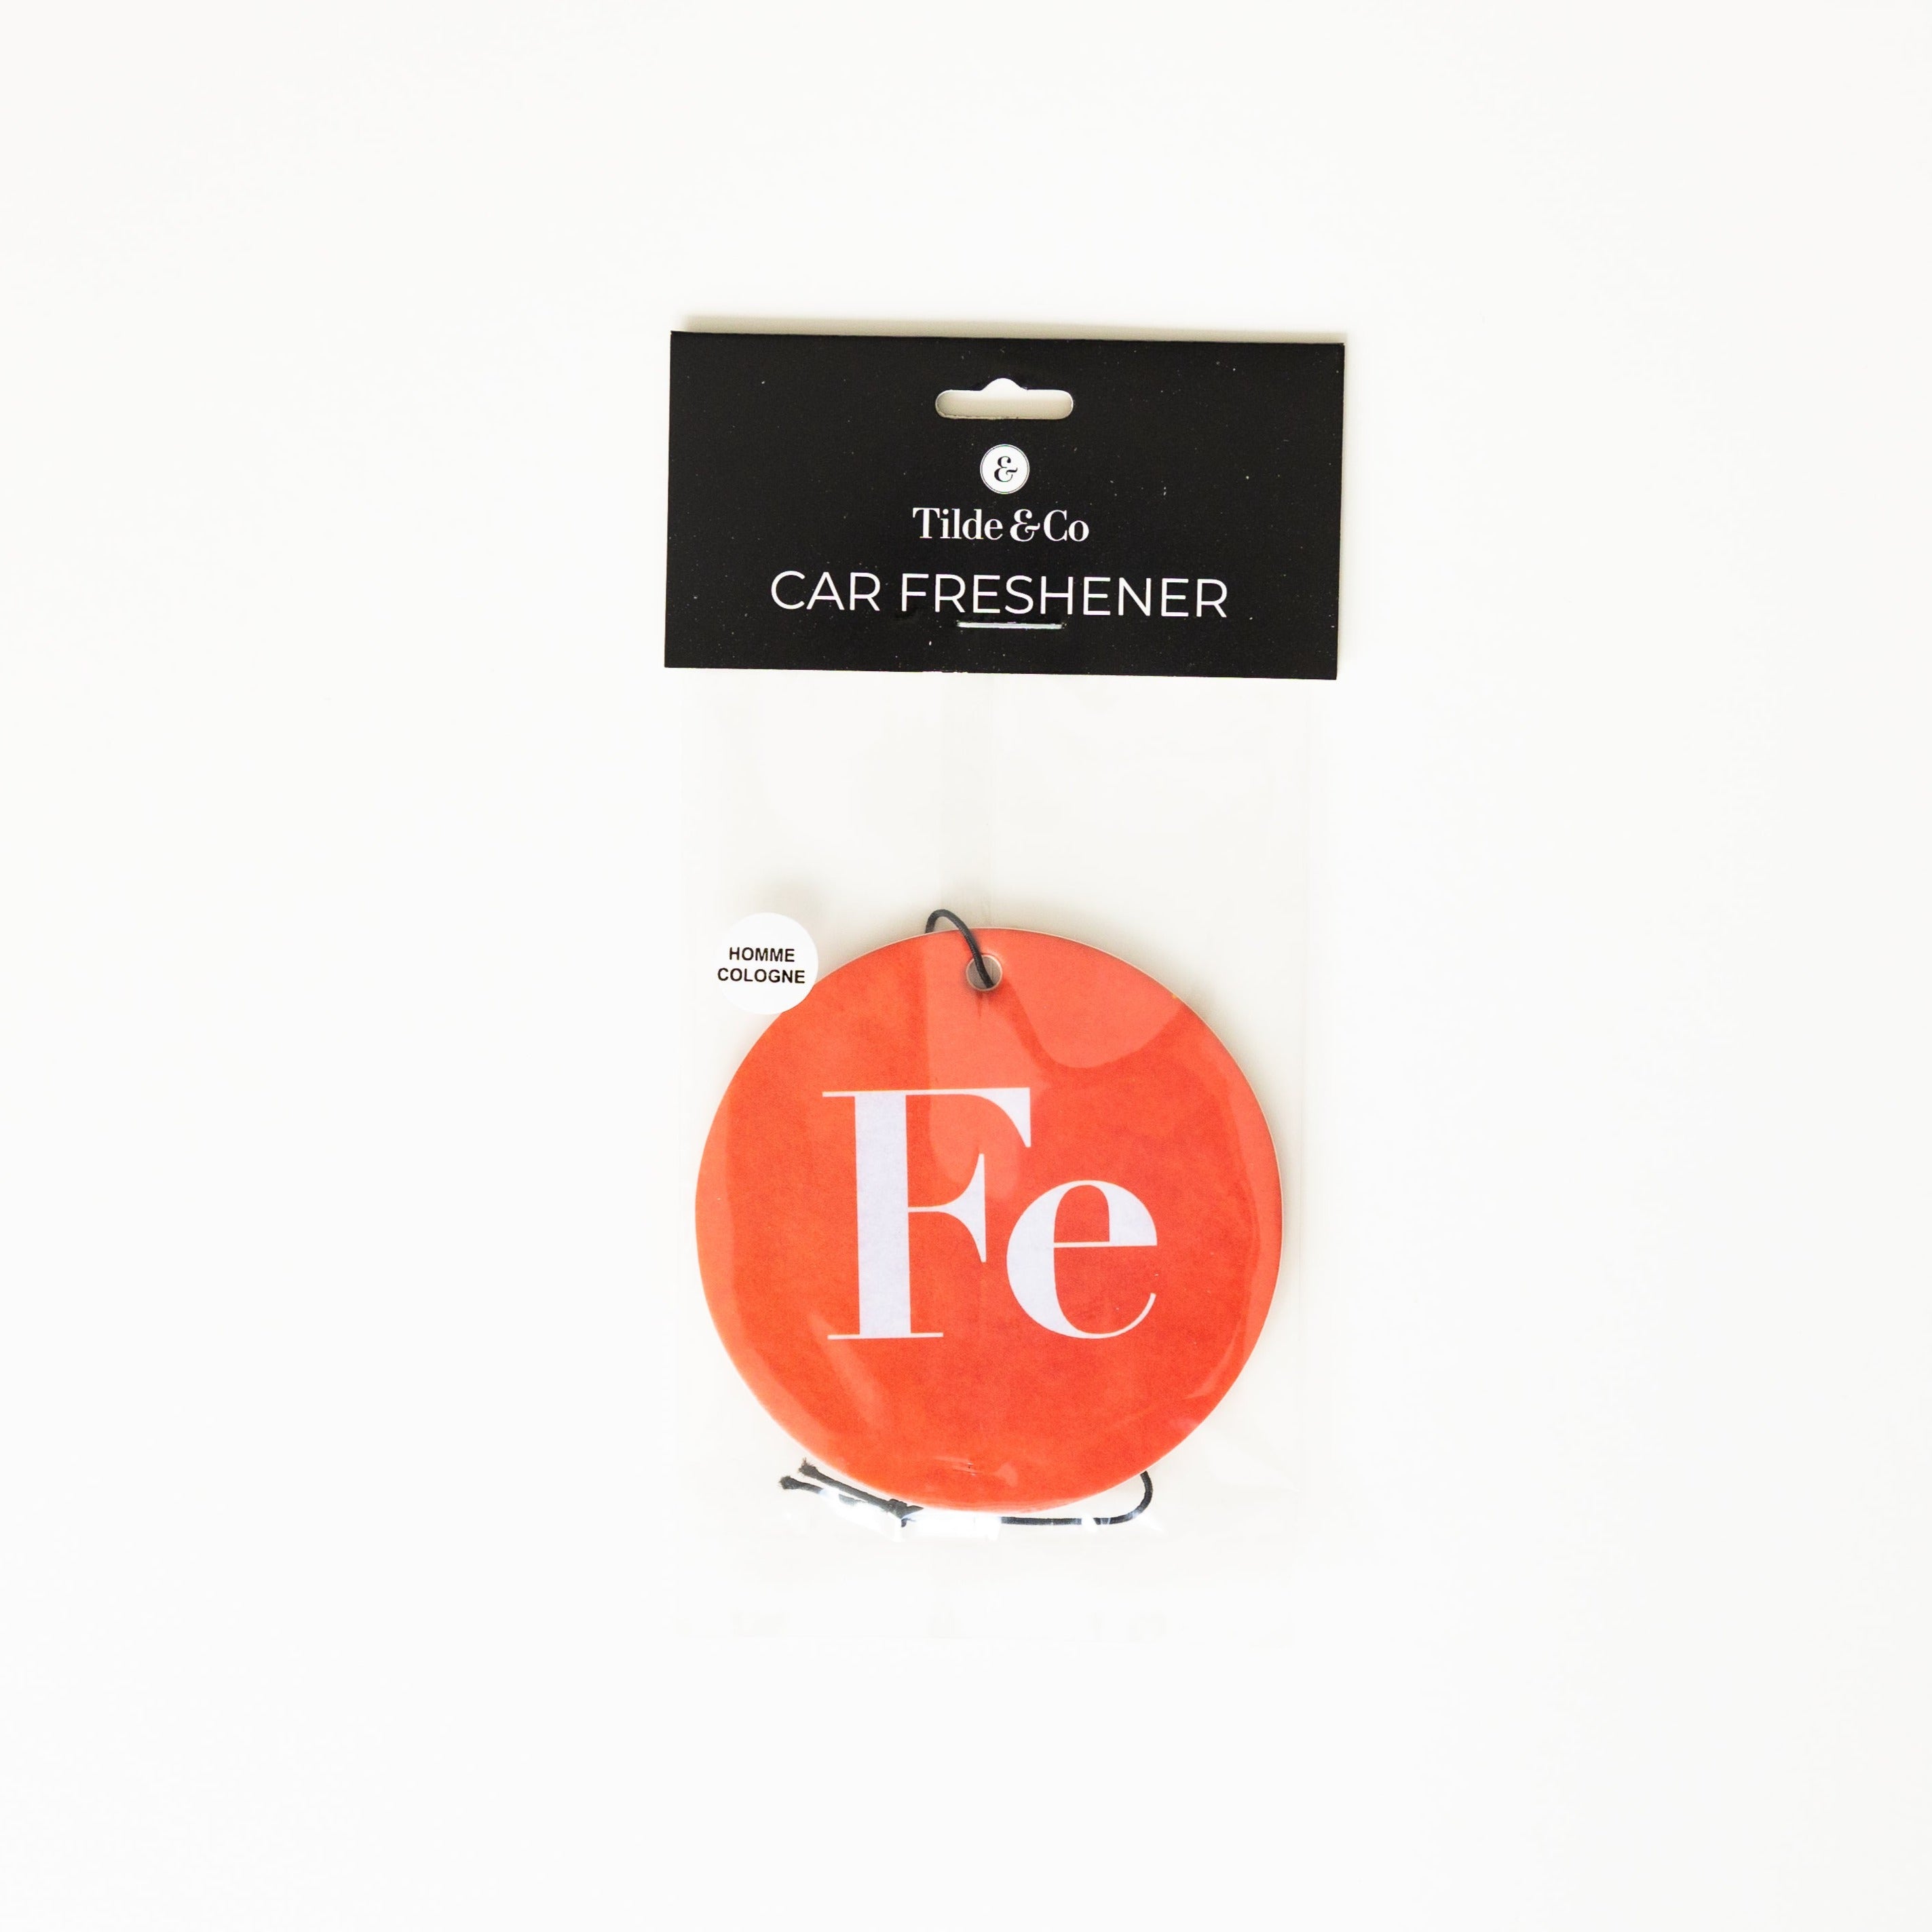 Car Freshener: Fe (Homme Cologne)